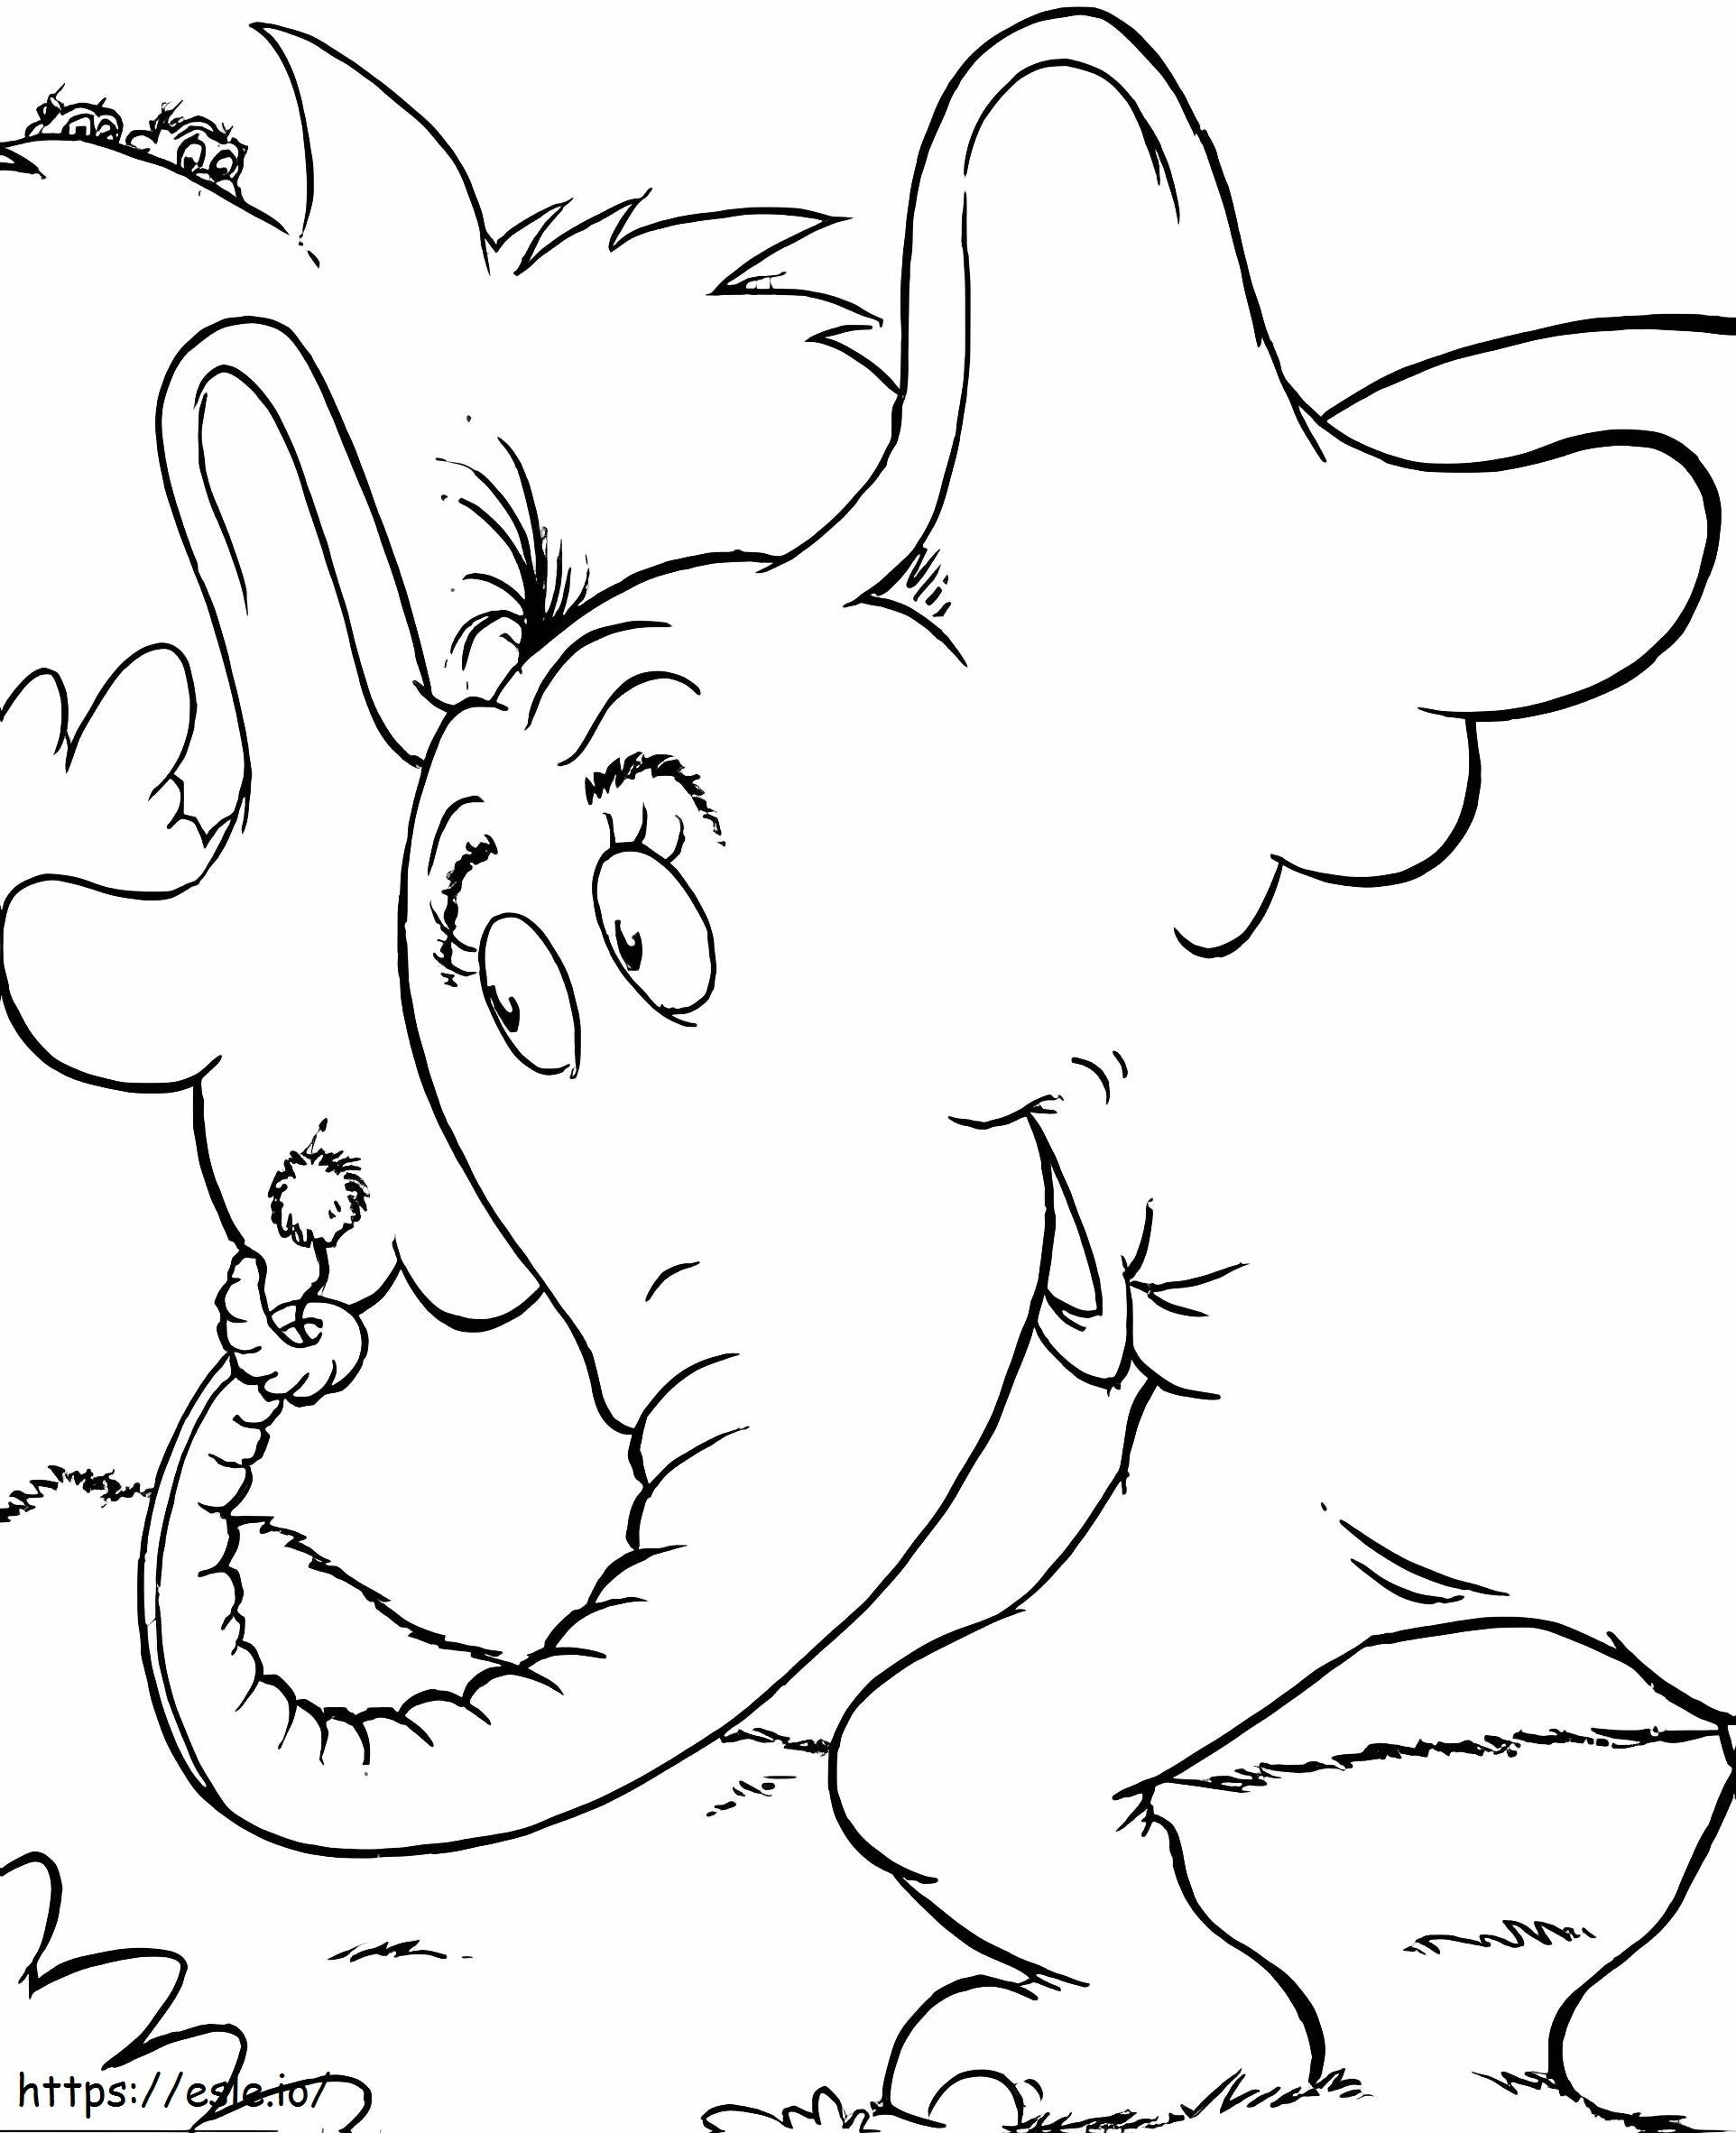 Elephant Horton coloring page